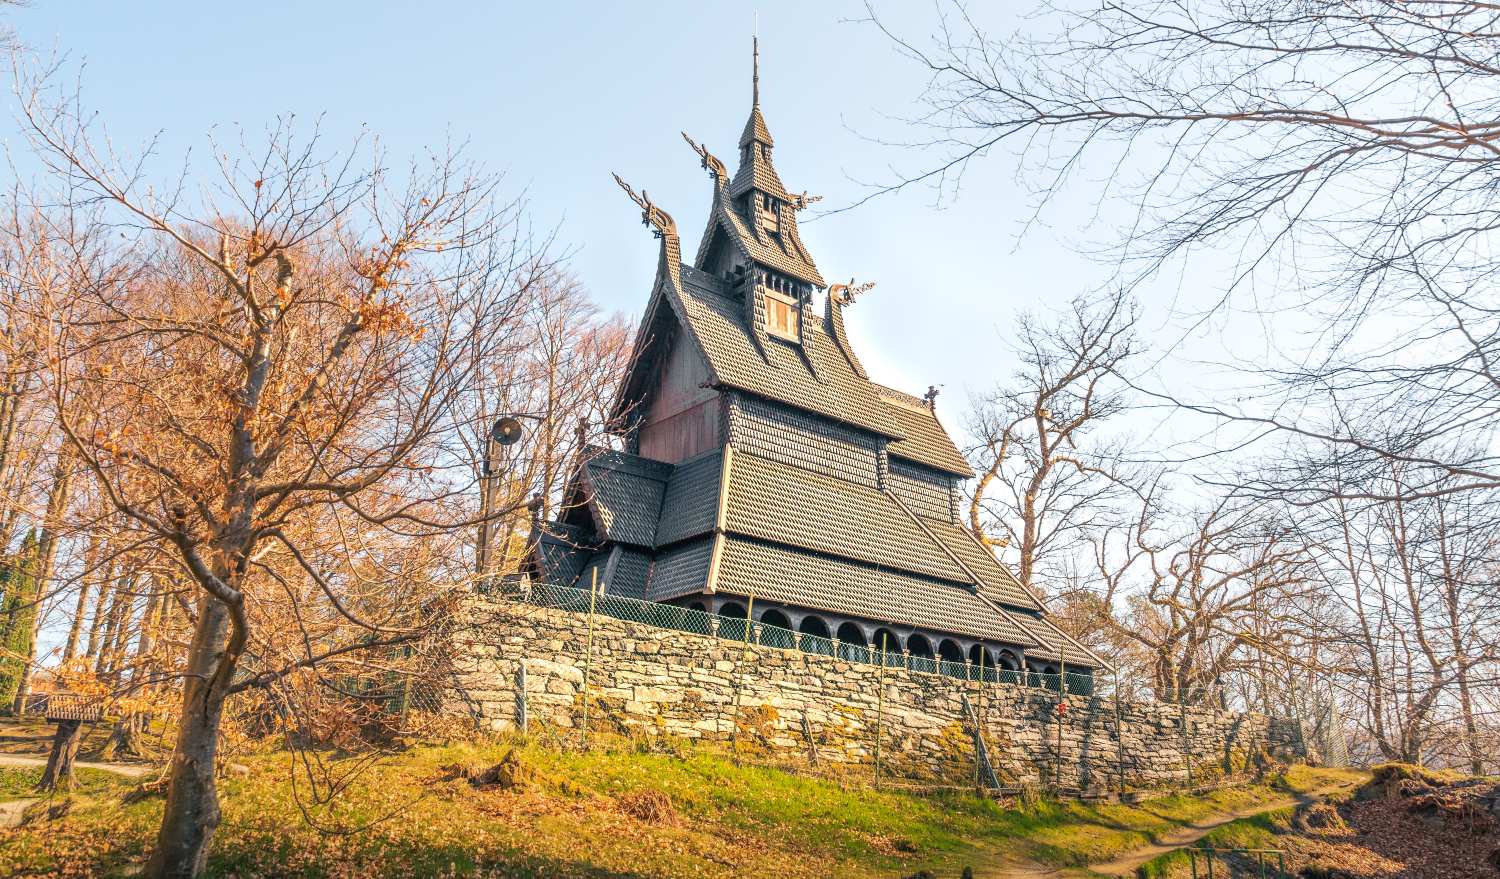 Fantoft Stave Church - a popular place to visit